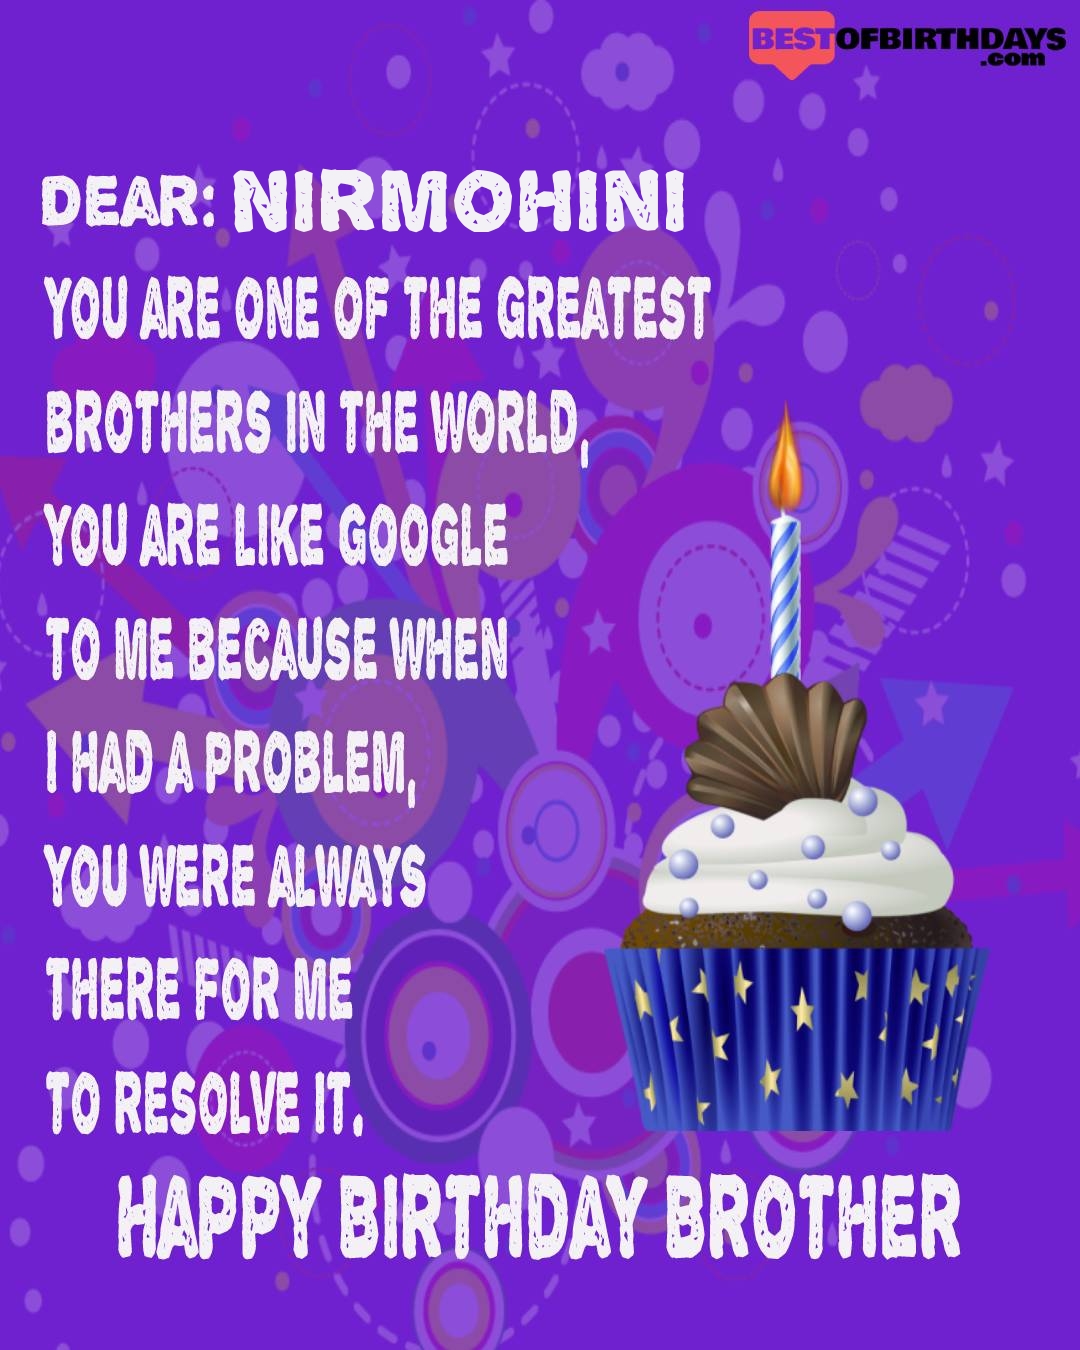 Happy birthday nirmohini bhai brother bro